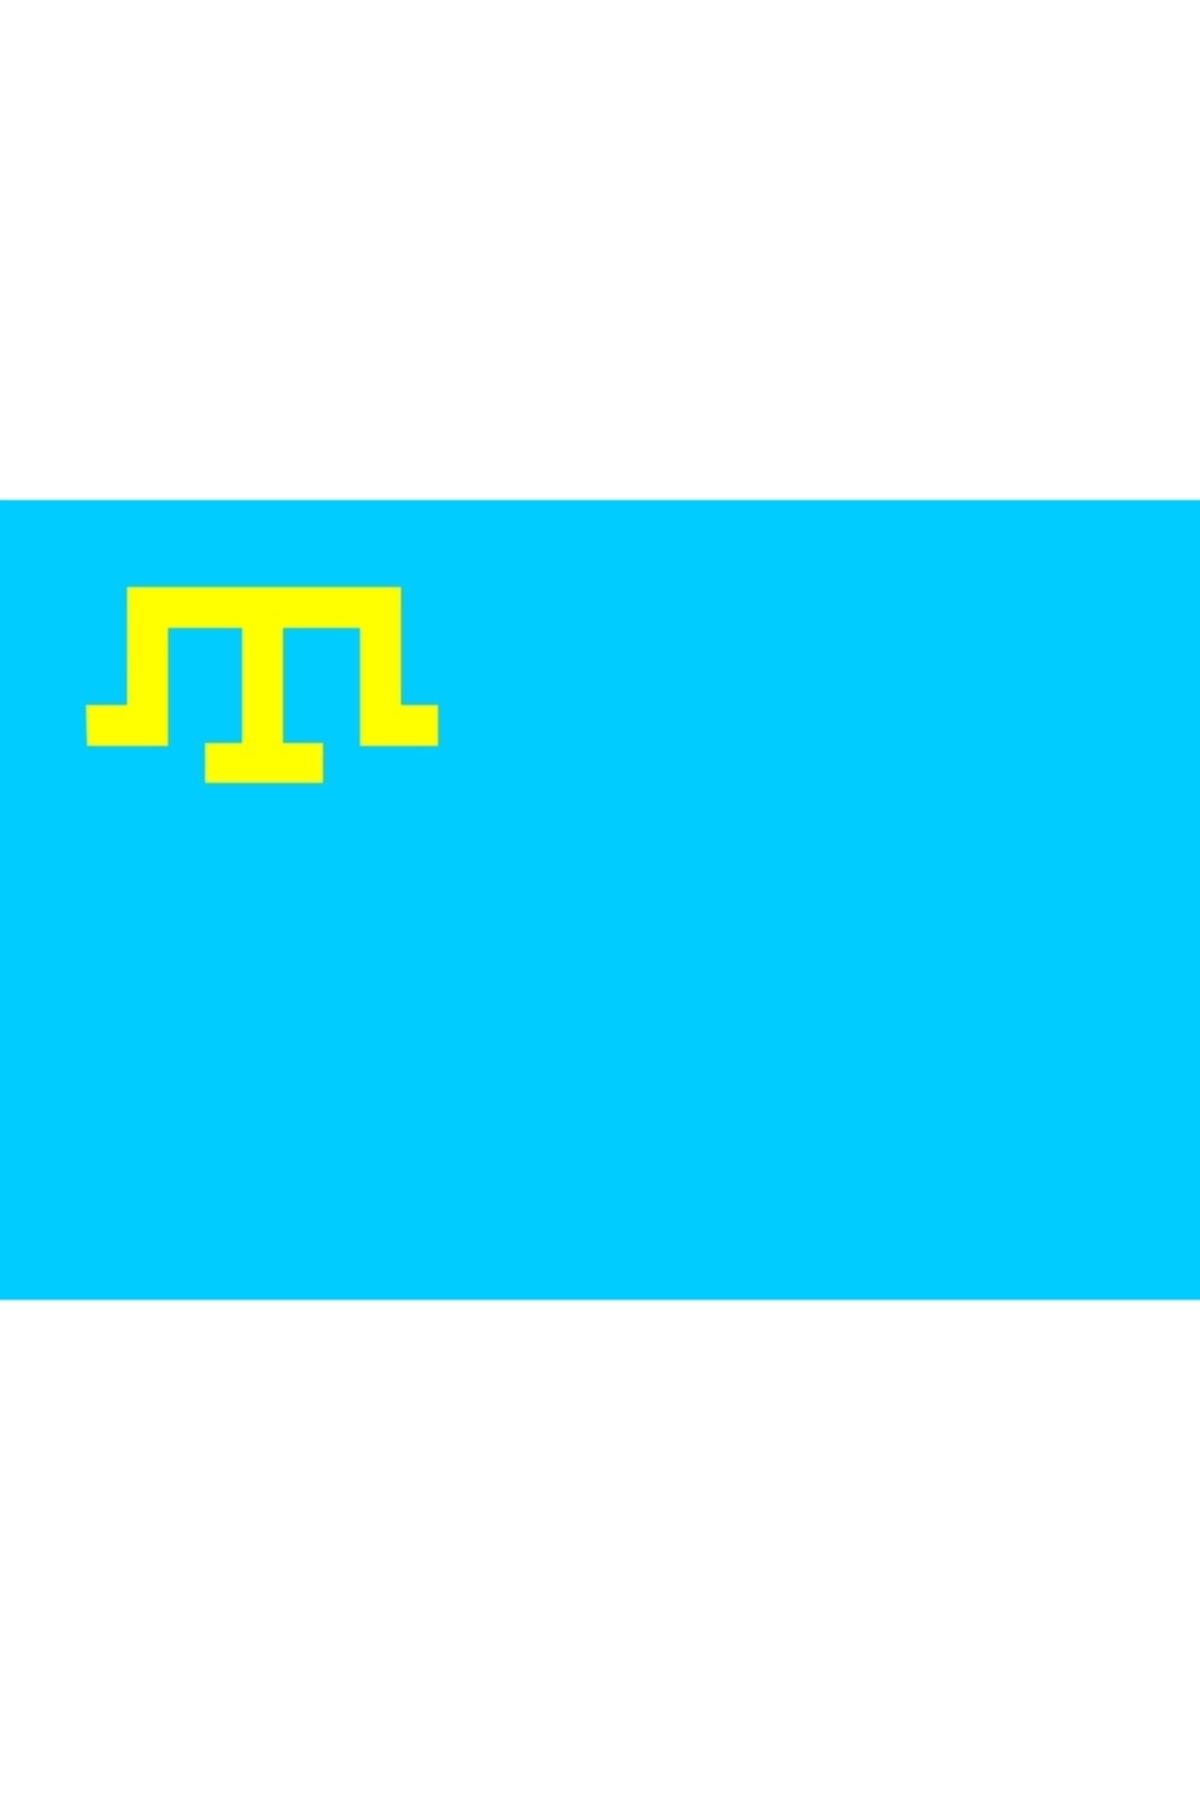 крымскотатарский флаг фото